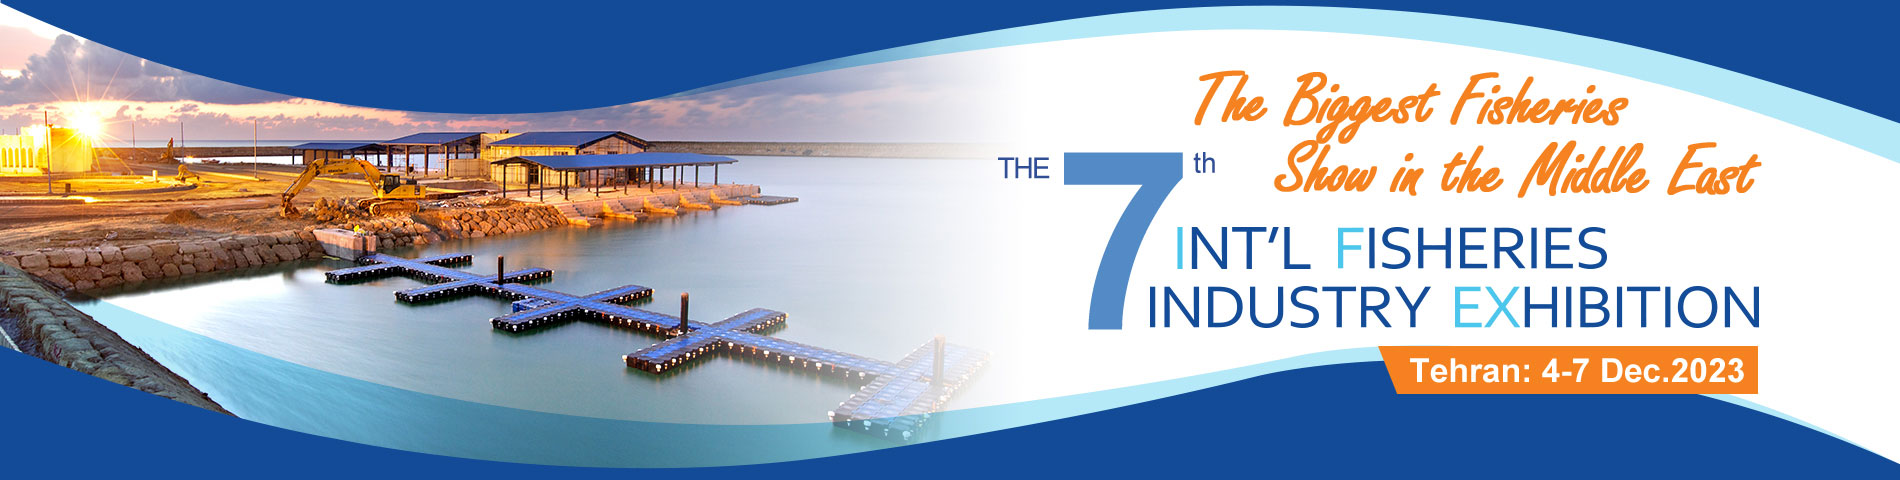 1678911825 header 3 - The 7th International Fisheries Industry (IFEX) Exhibition 2023 in Iran/Tehran